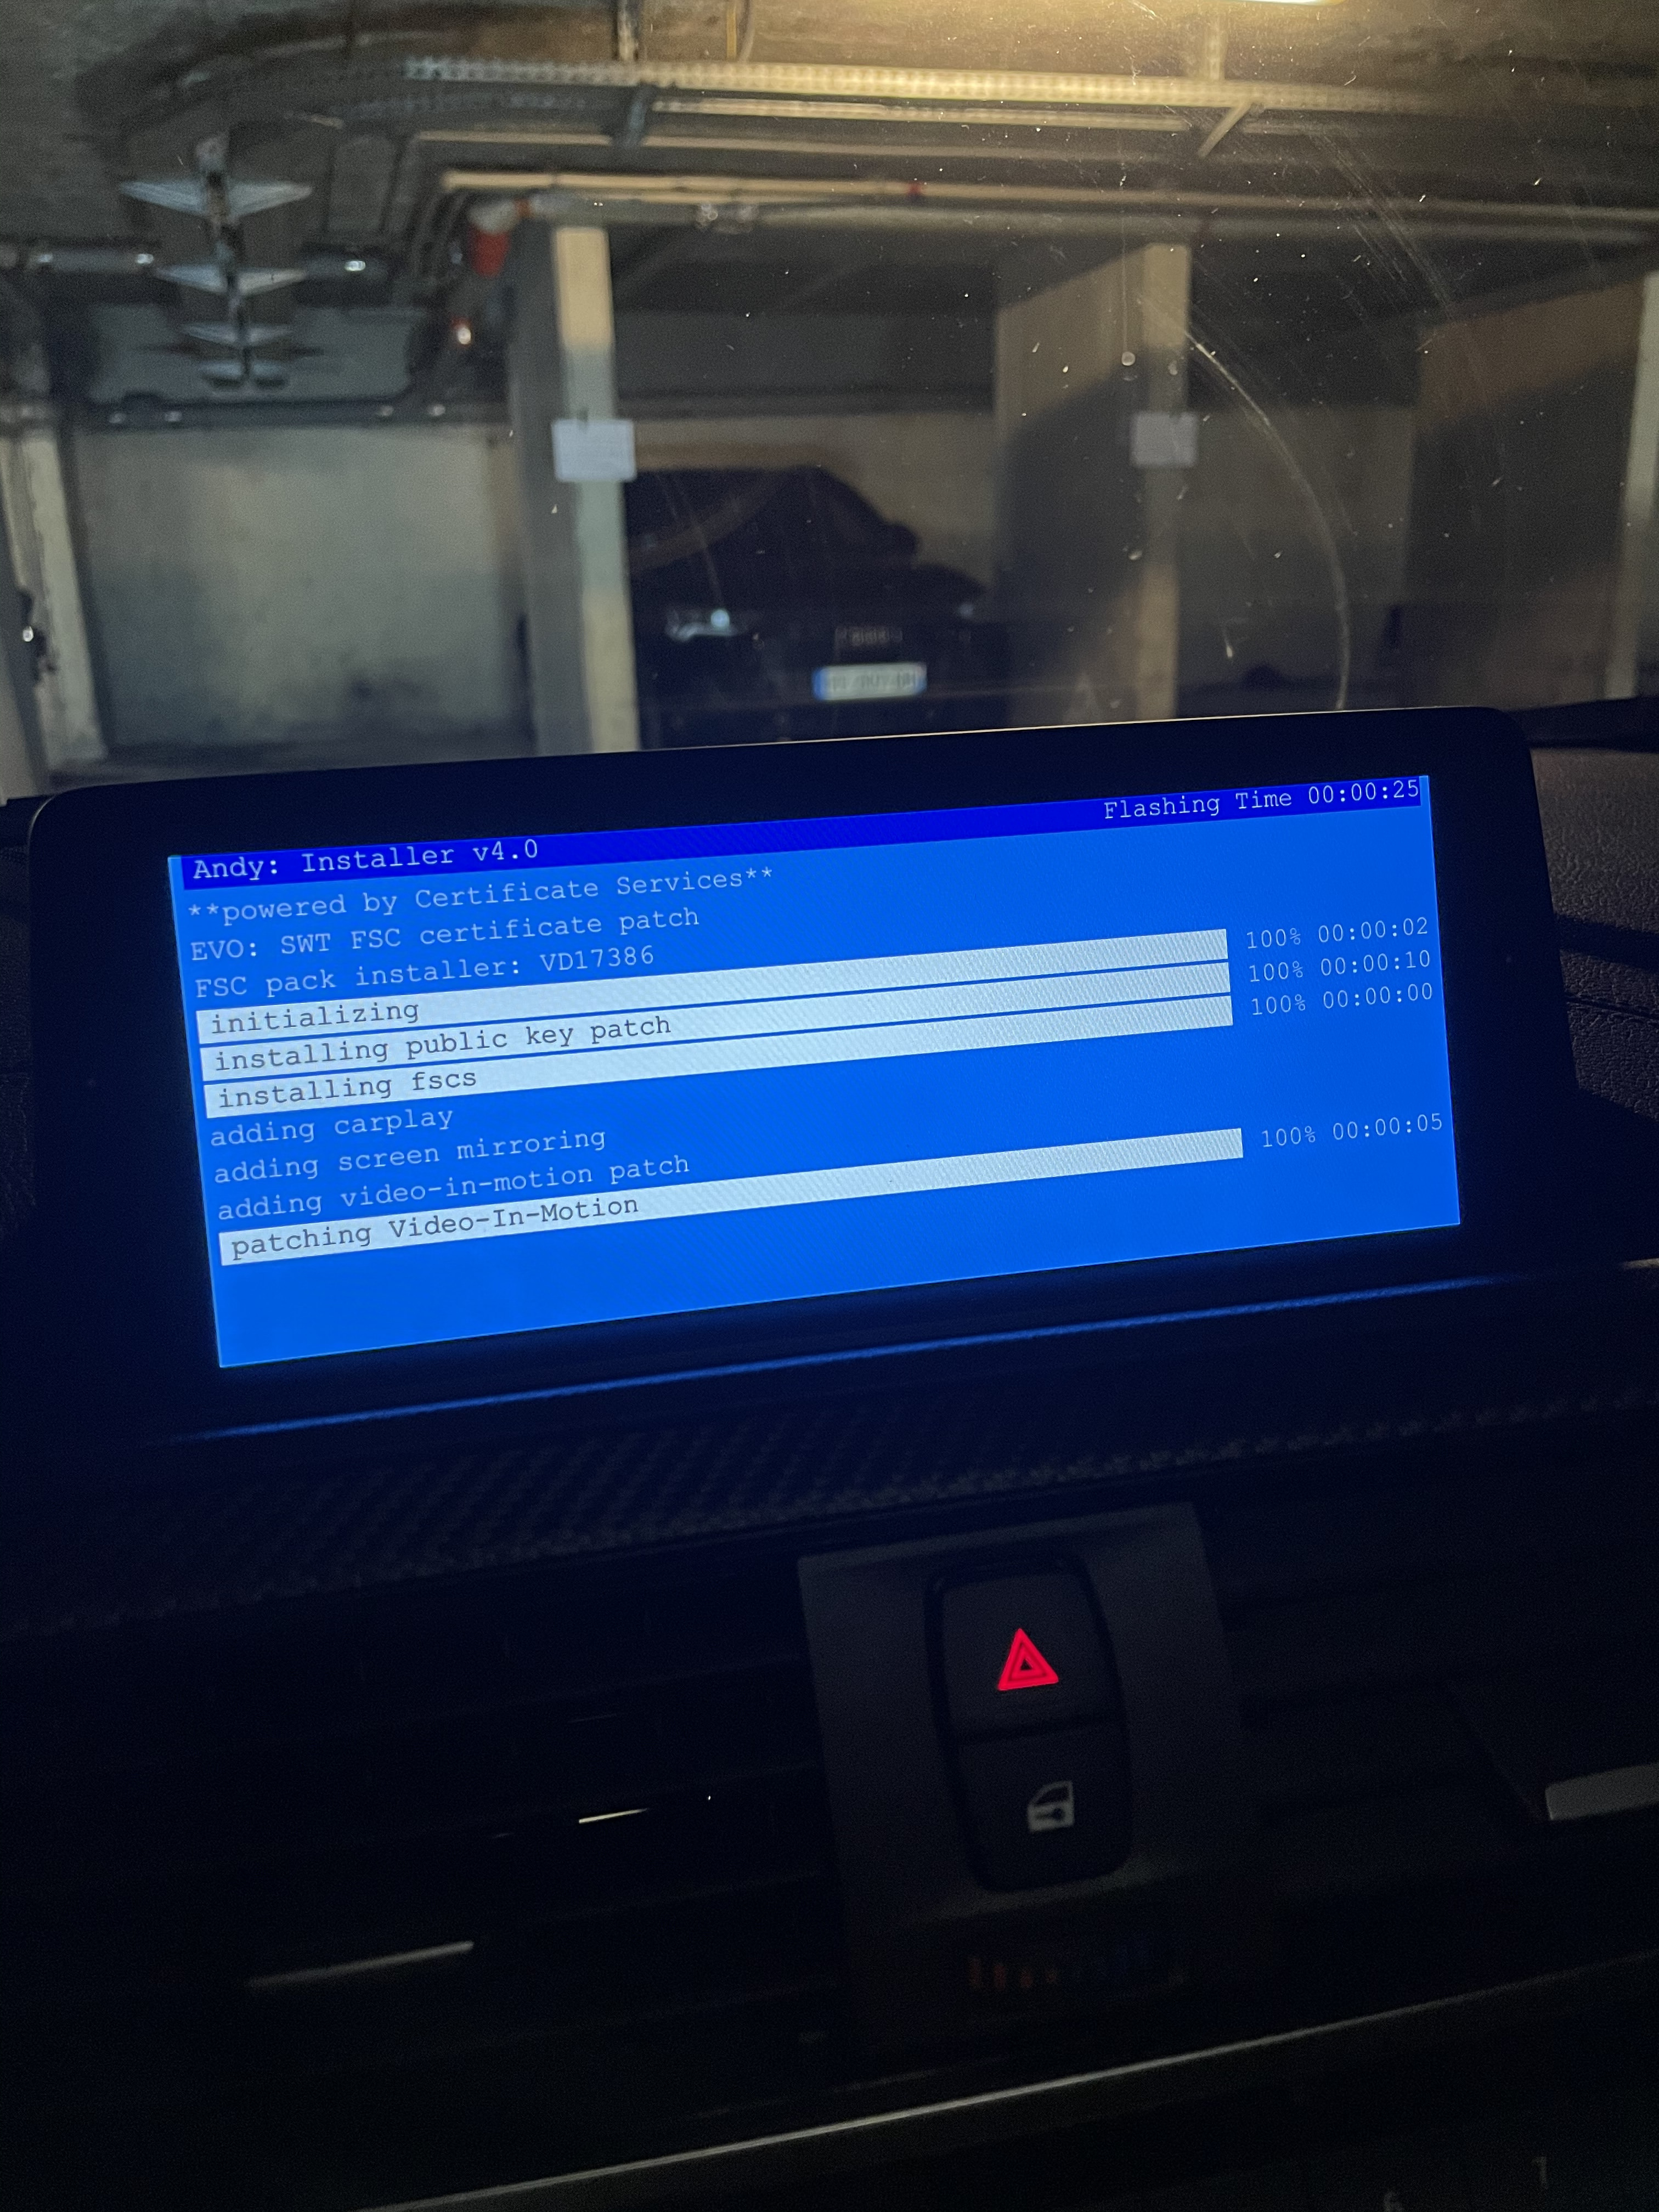 Tutoriel installation Carplay sur BMW F10 avec système NBT –